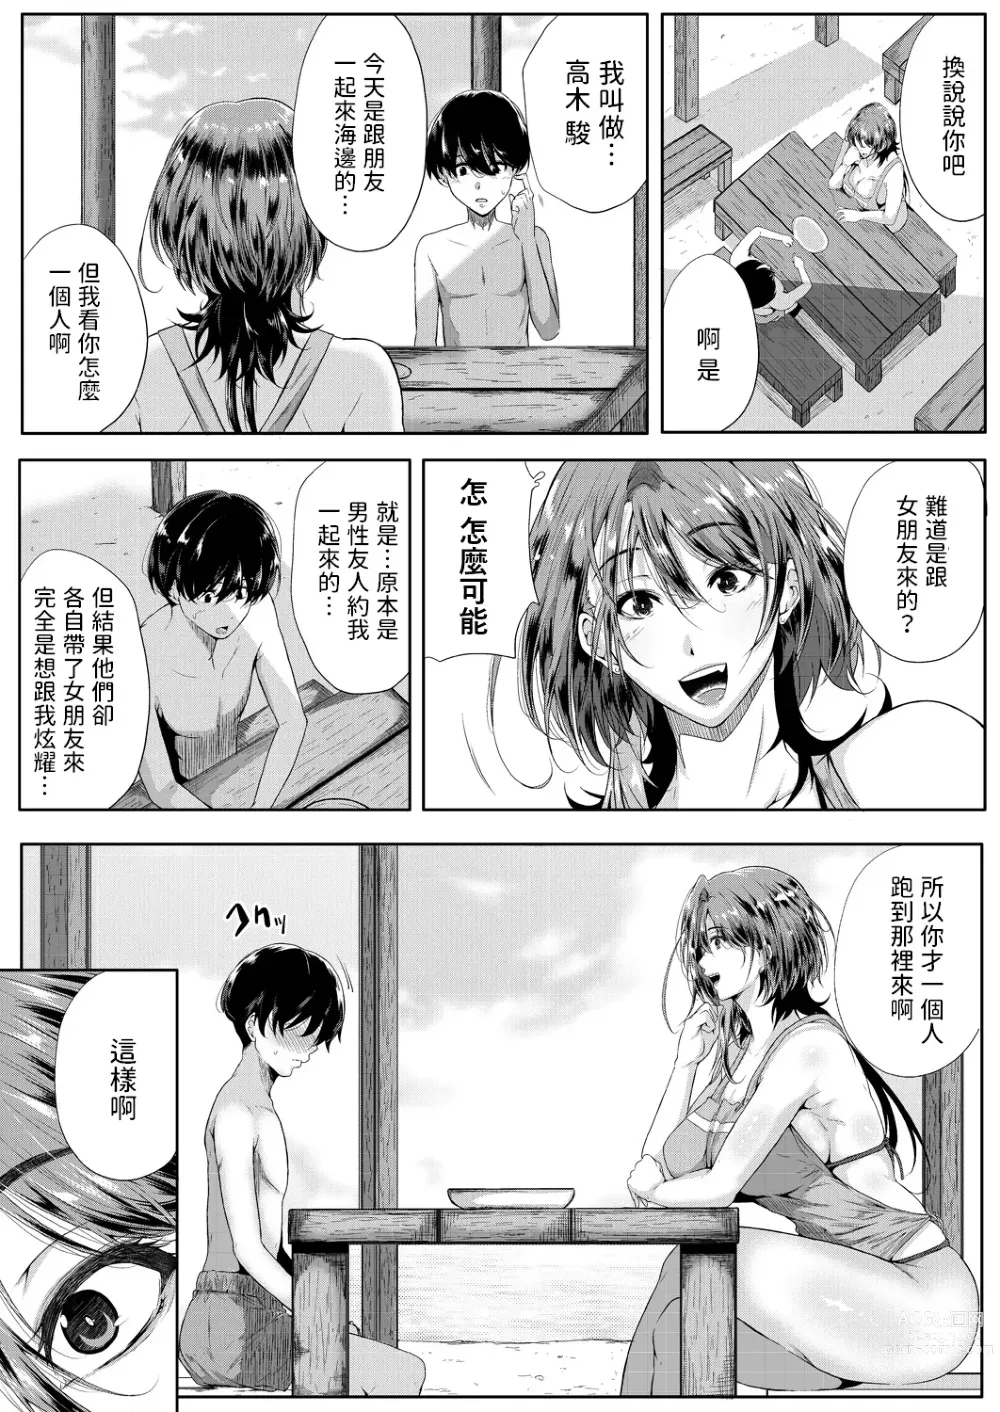 Page 8 of manga Strawberry Mermaid